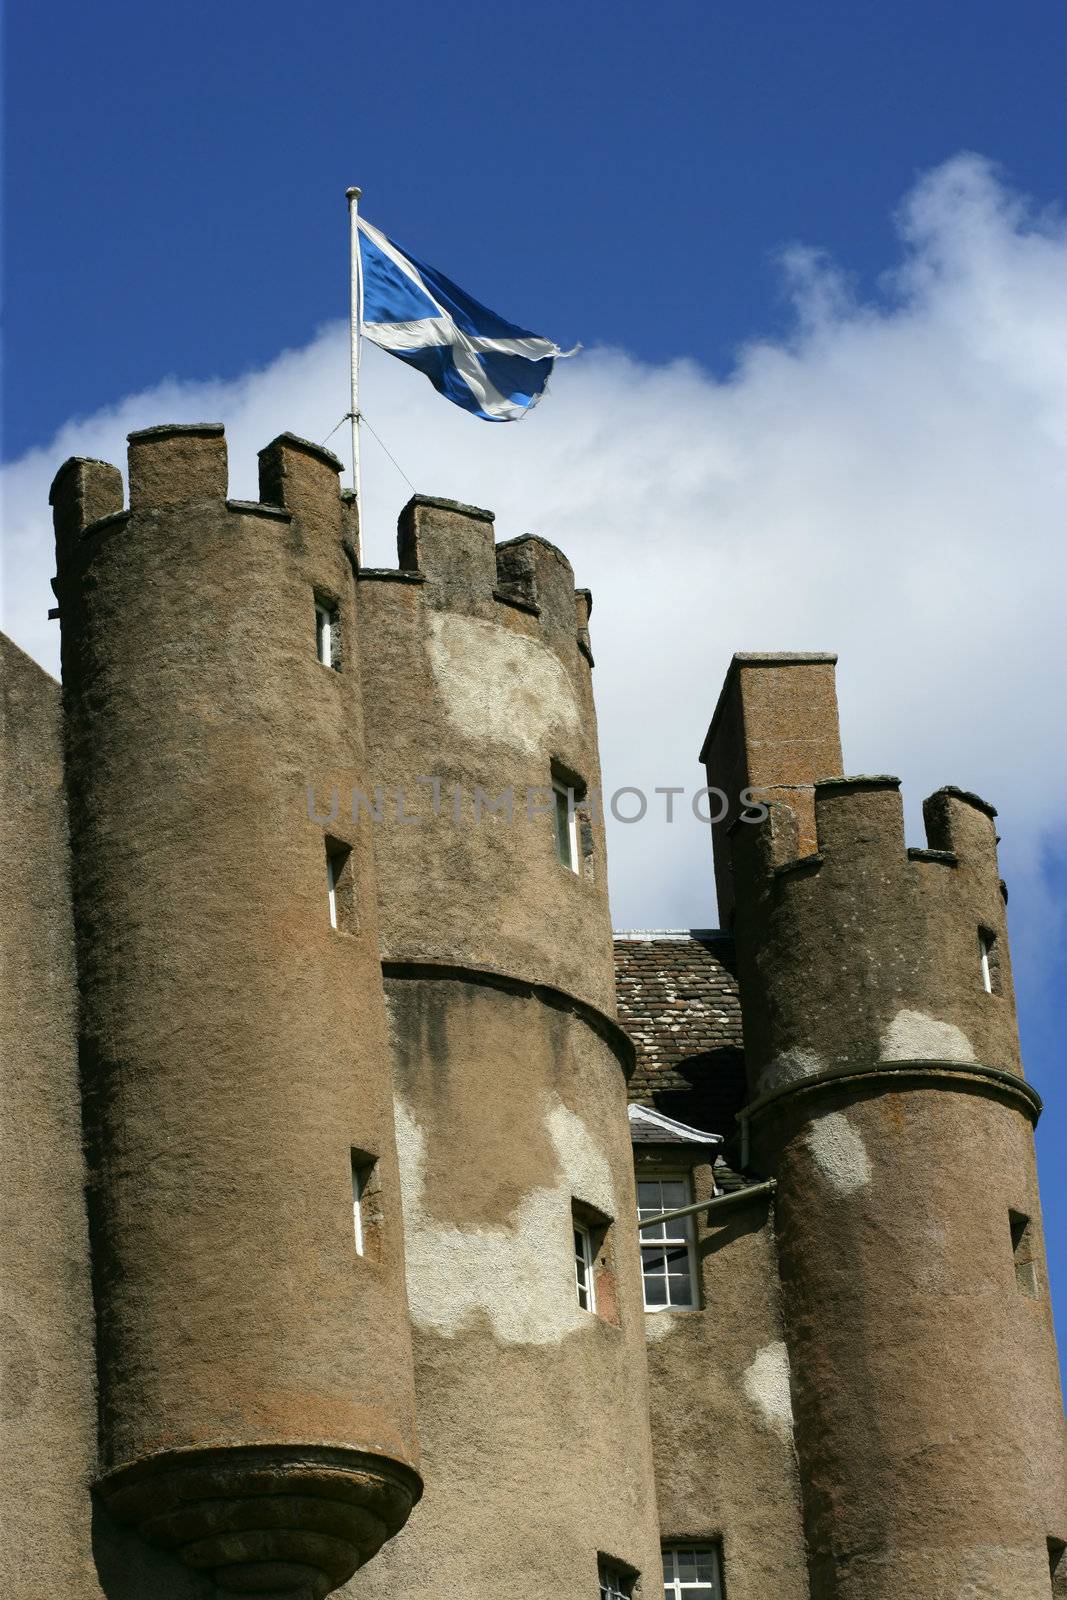 Castle in Scotland 2 by sumners